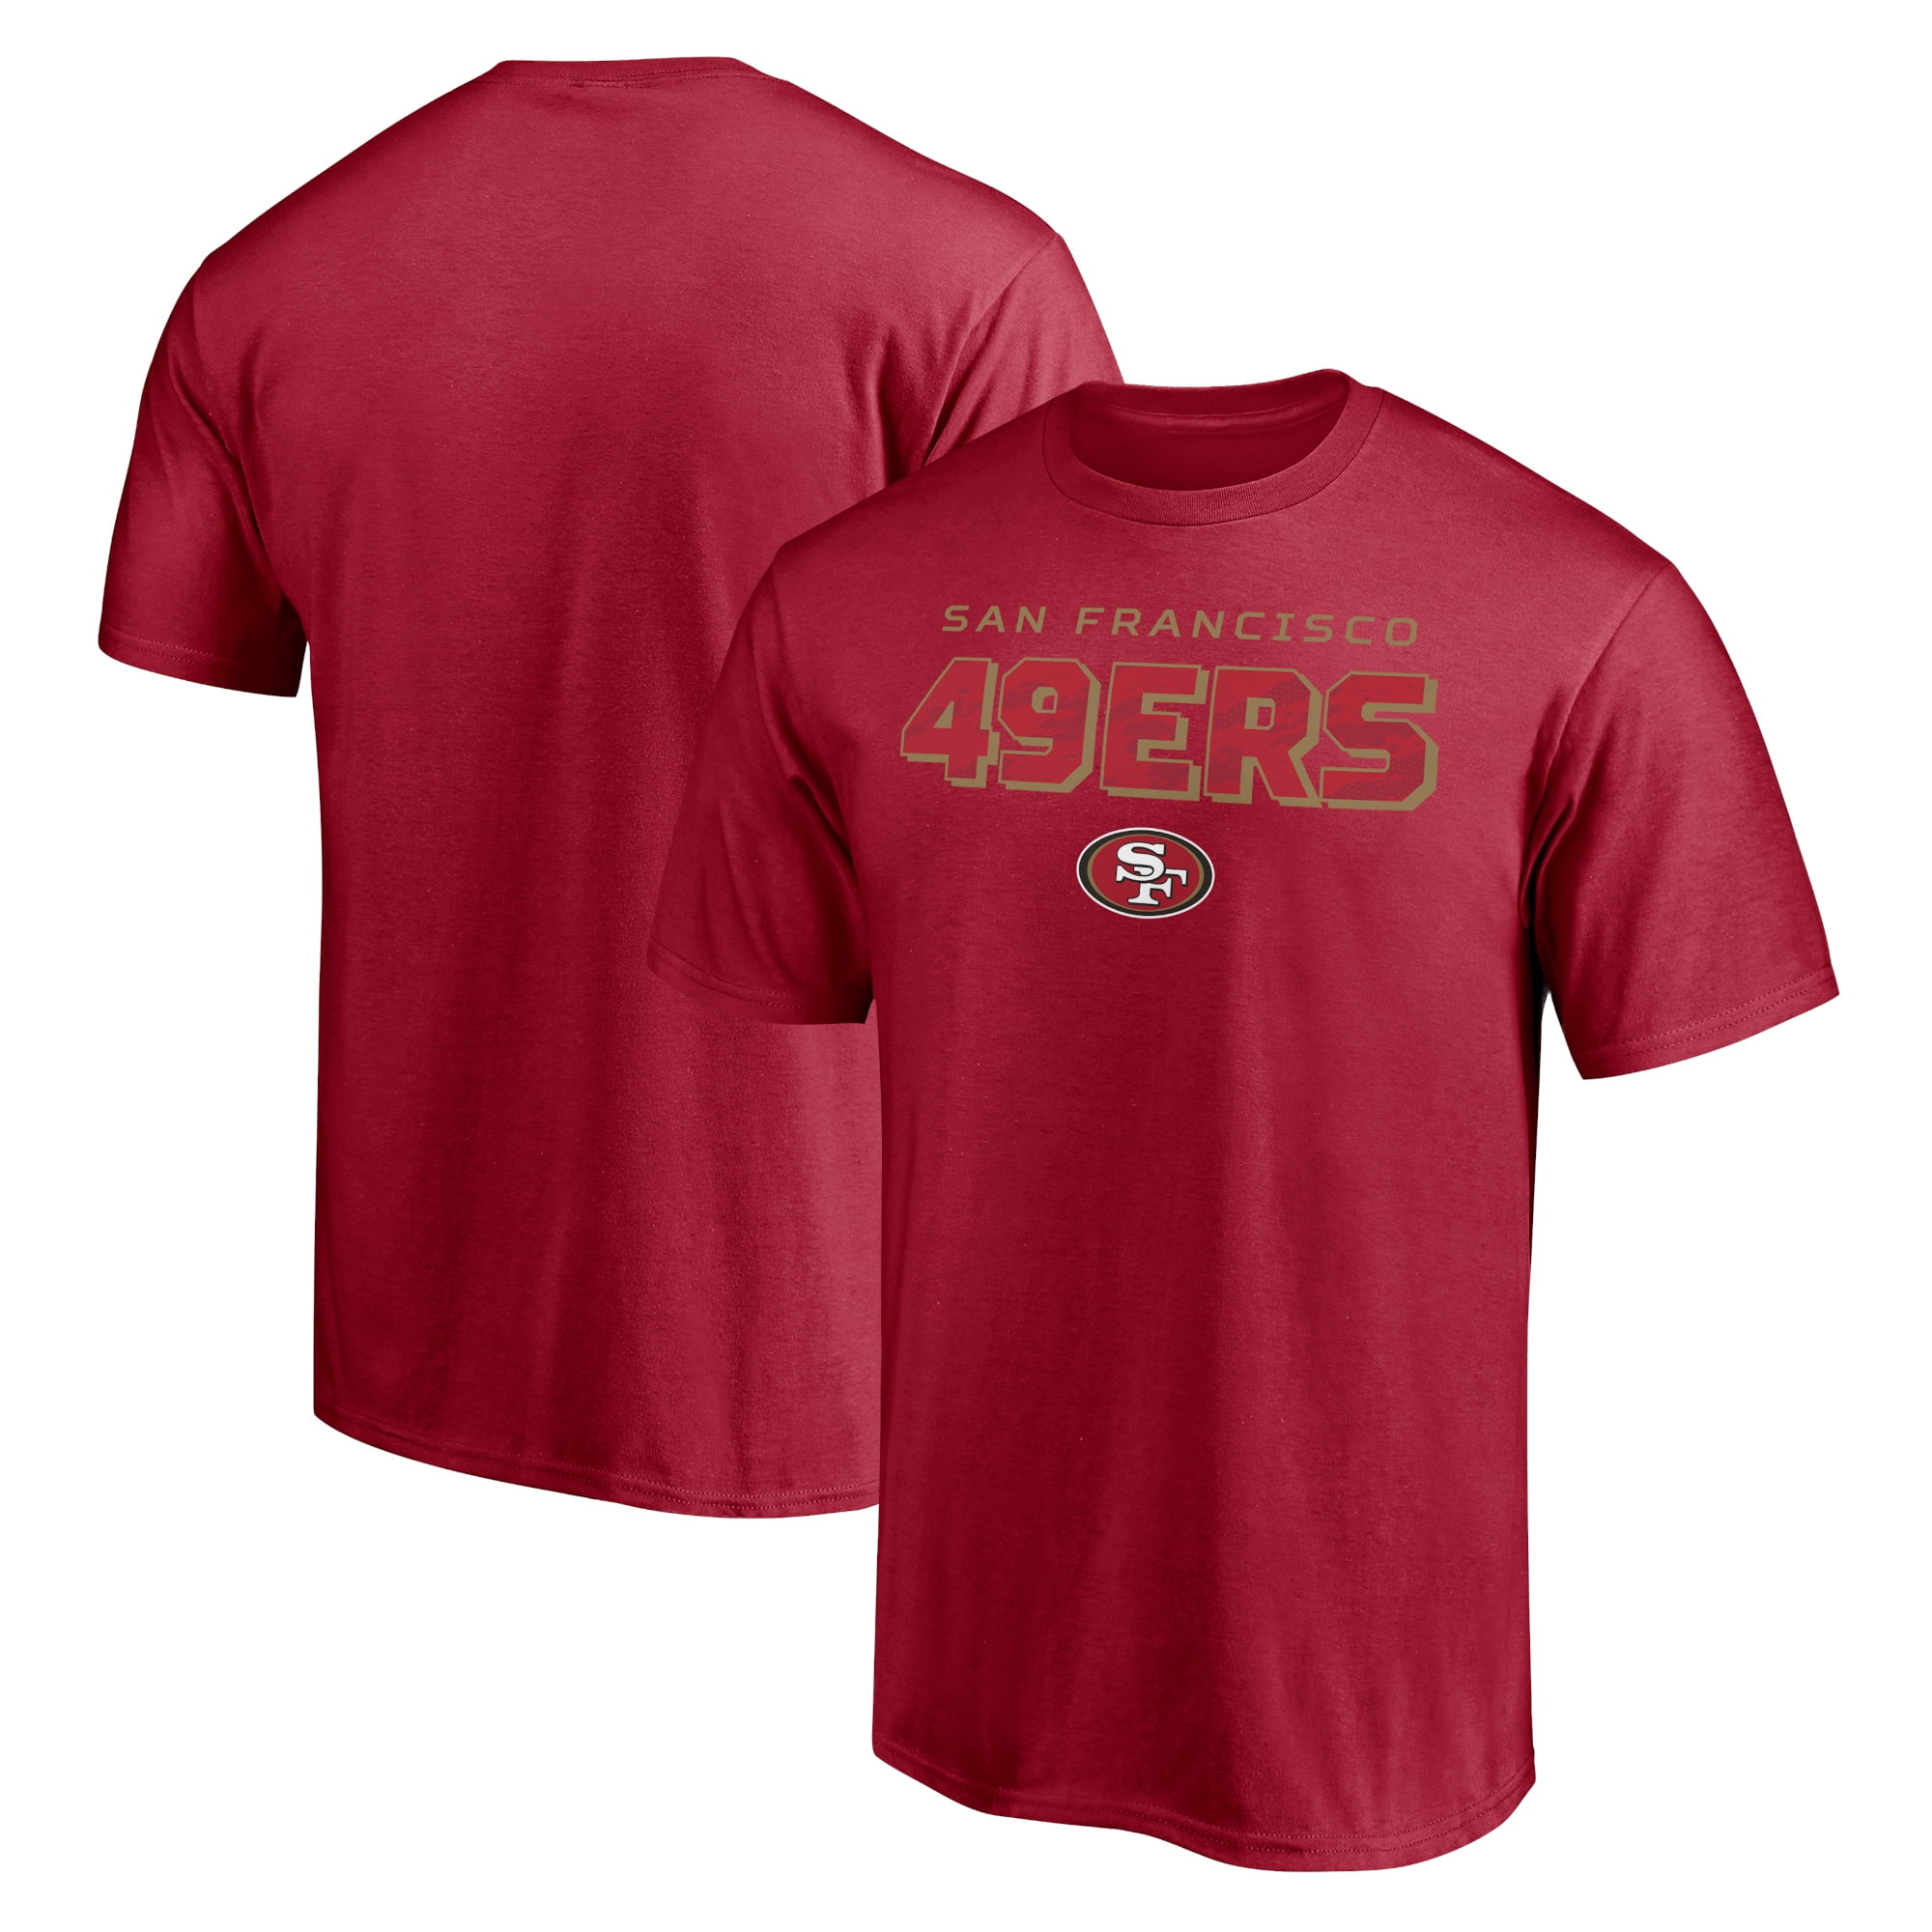 49ers t shirt sale